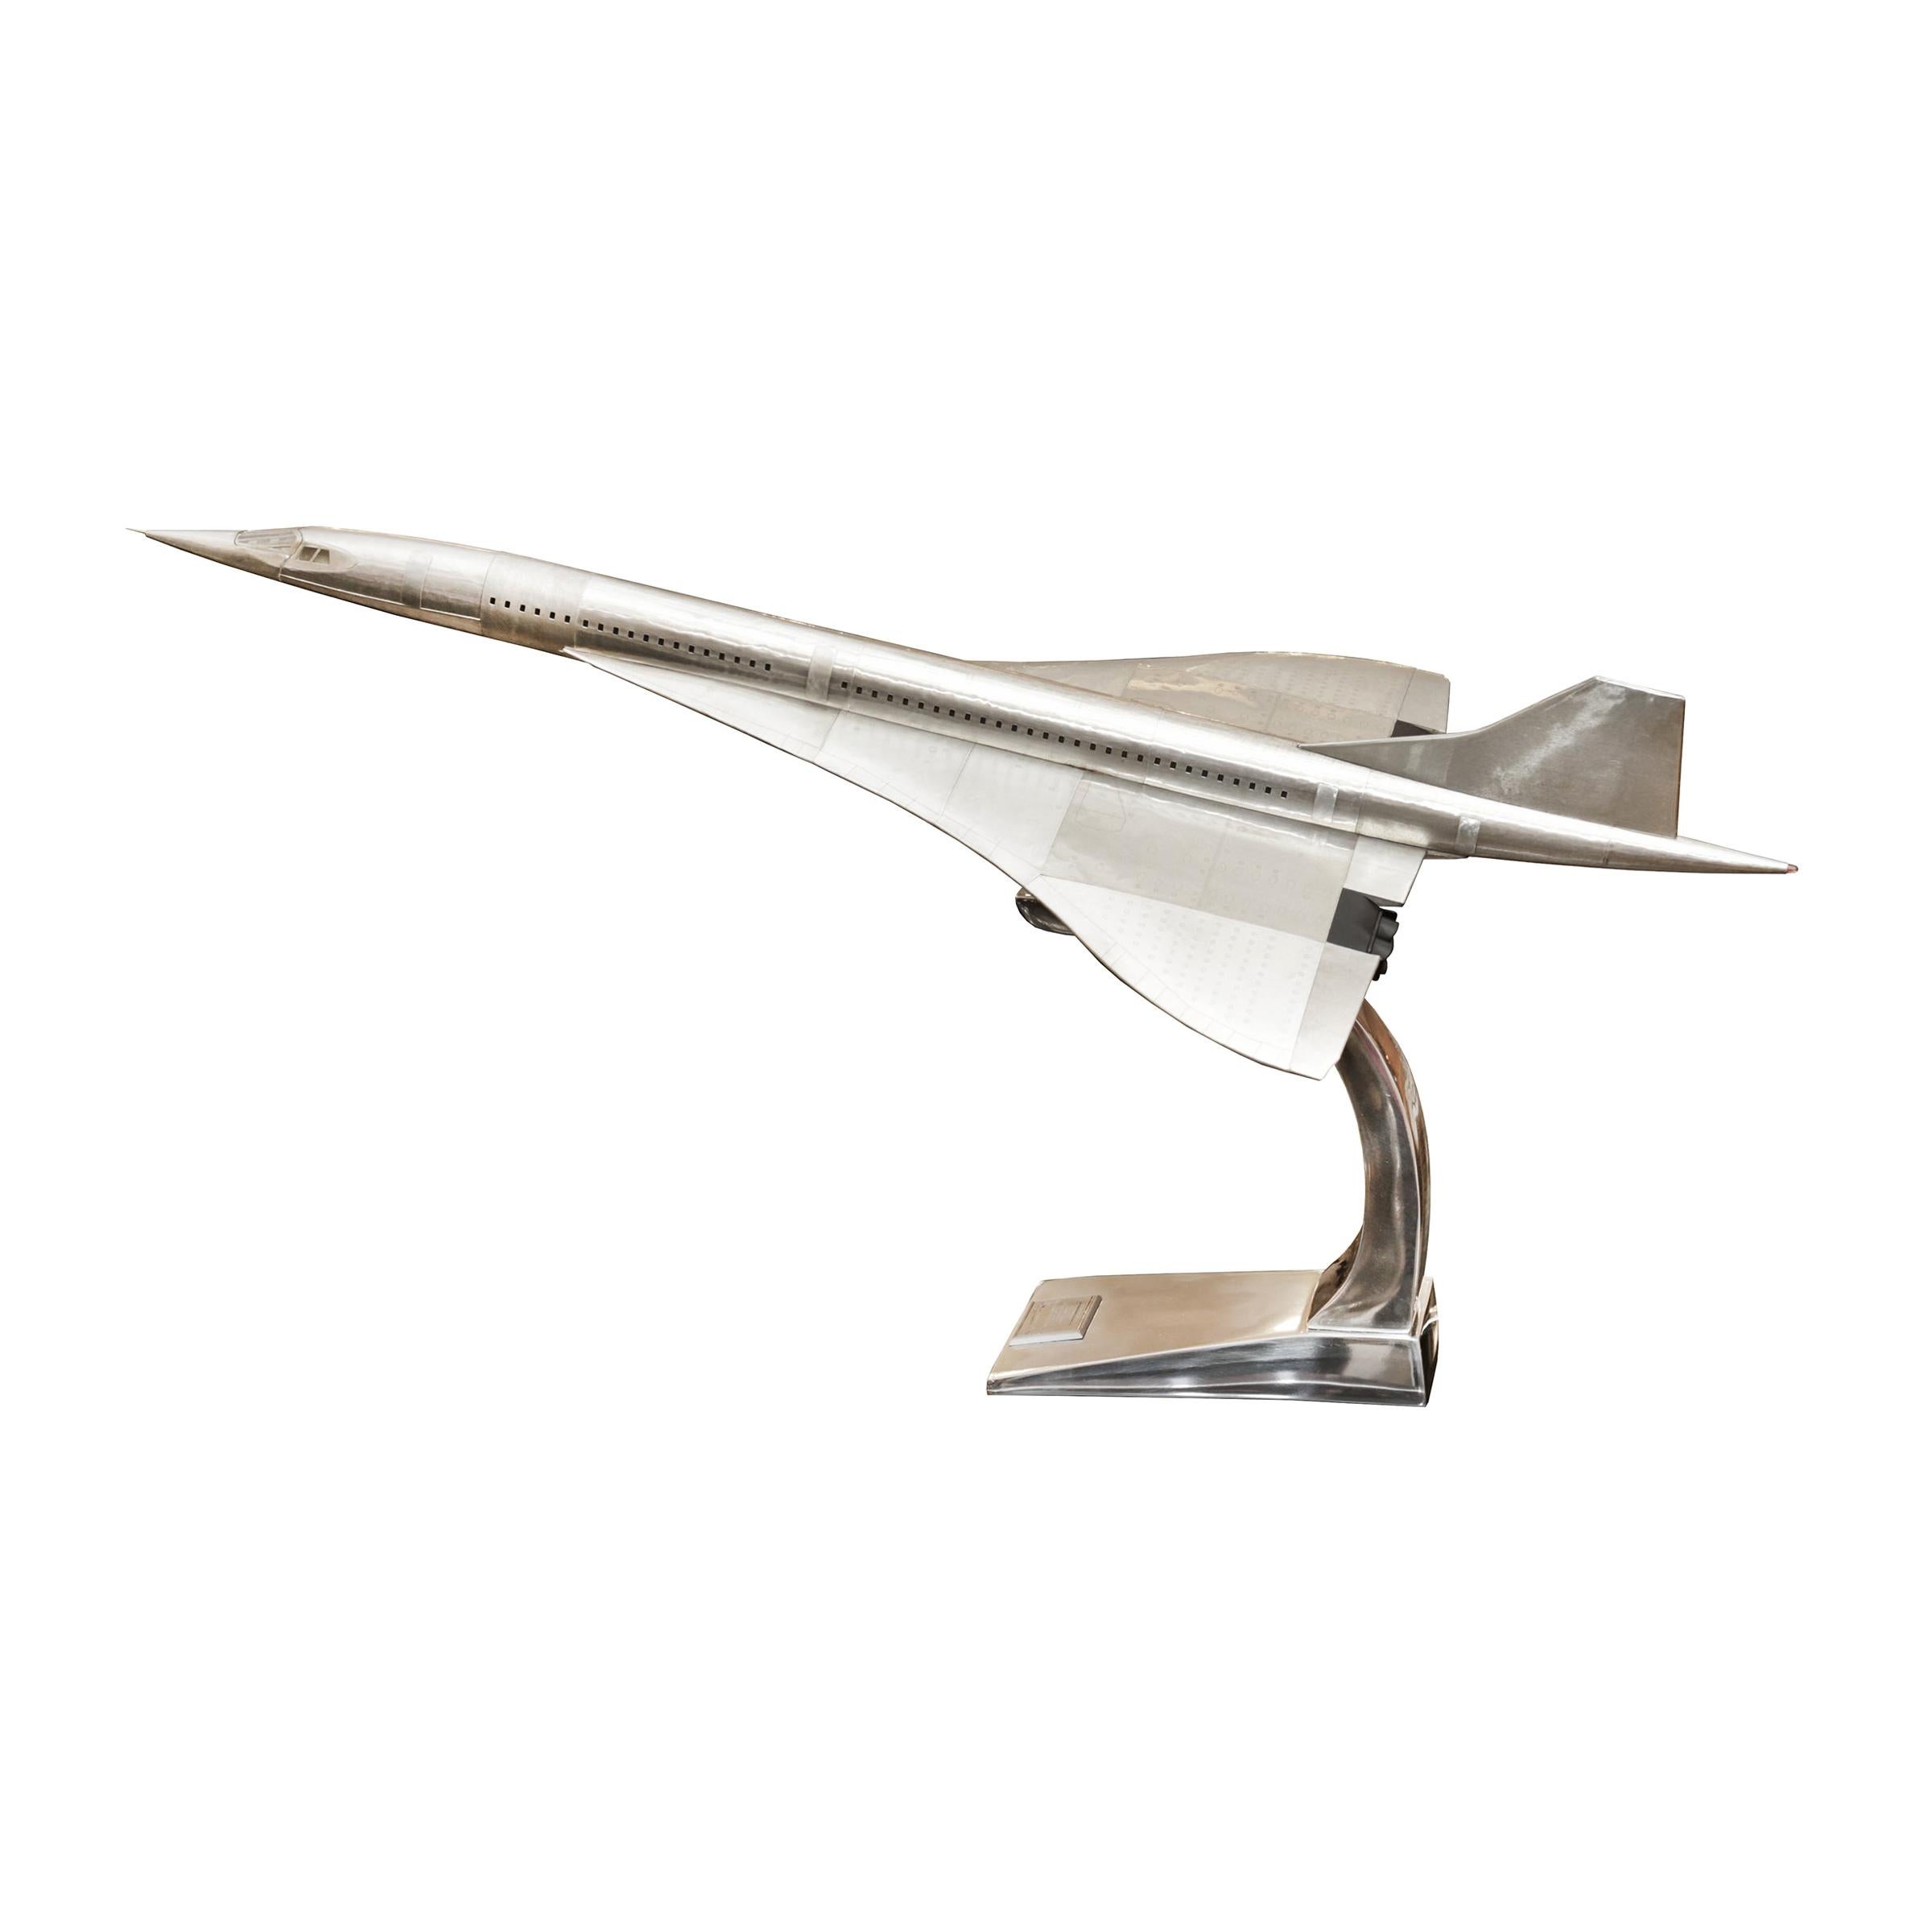 Concorde Supersonic Model